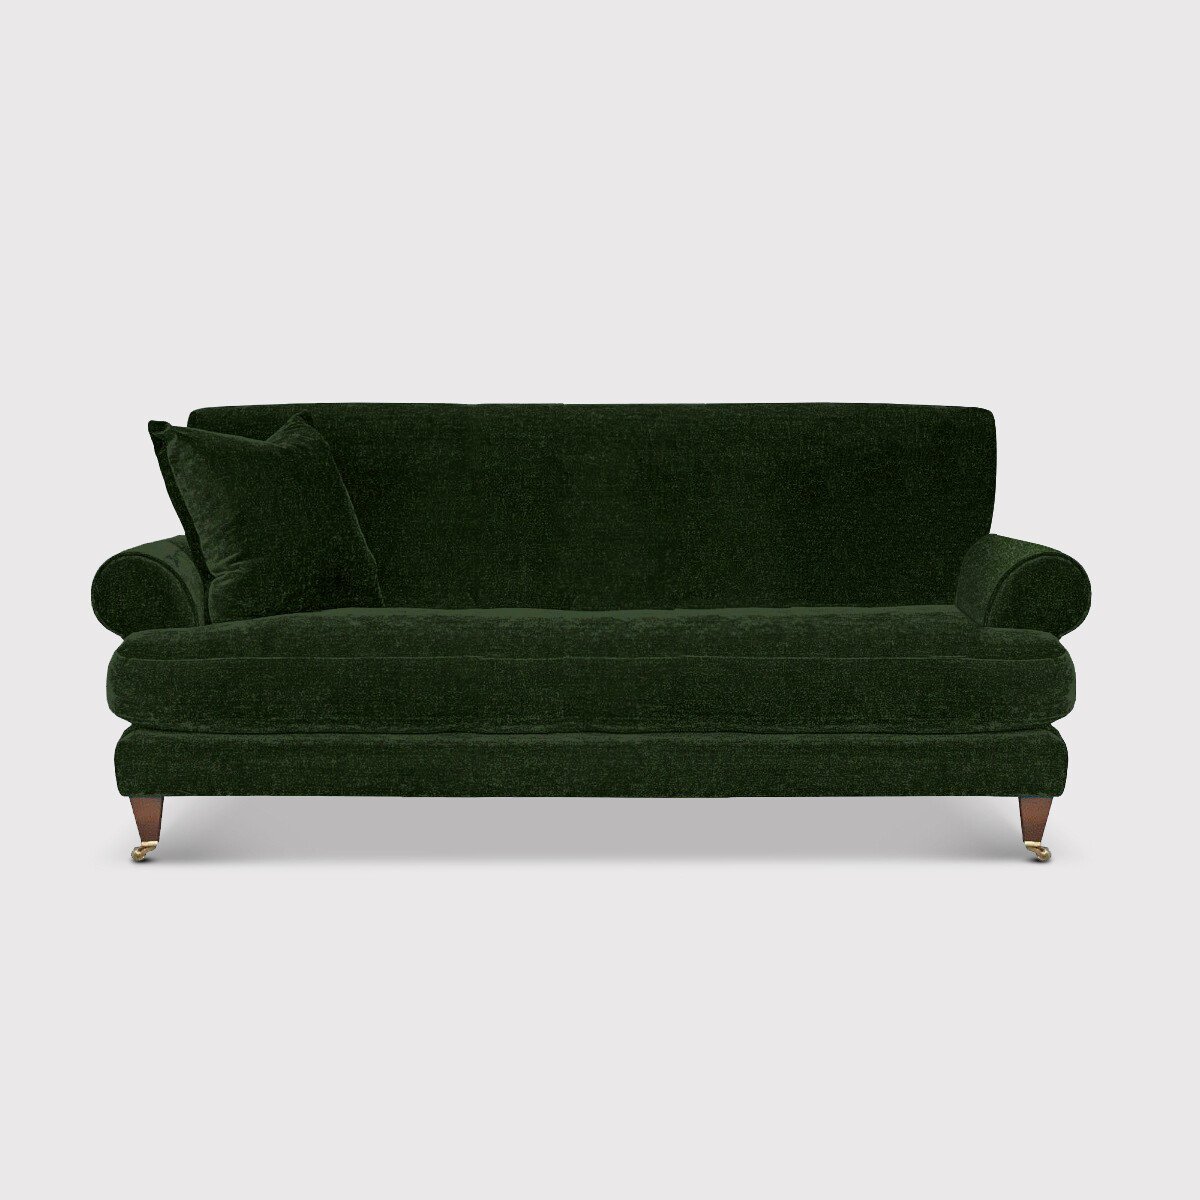 Fairlawn 2 Seater Sofa, Green Fabric | Barker & Stonehouse